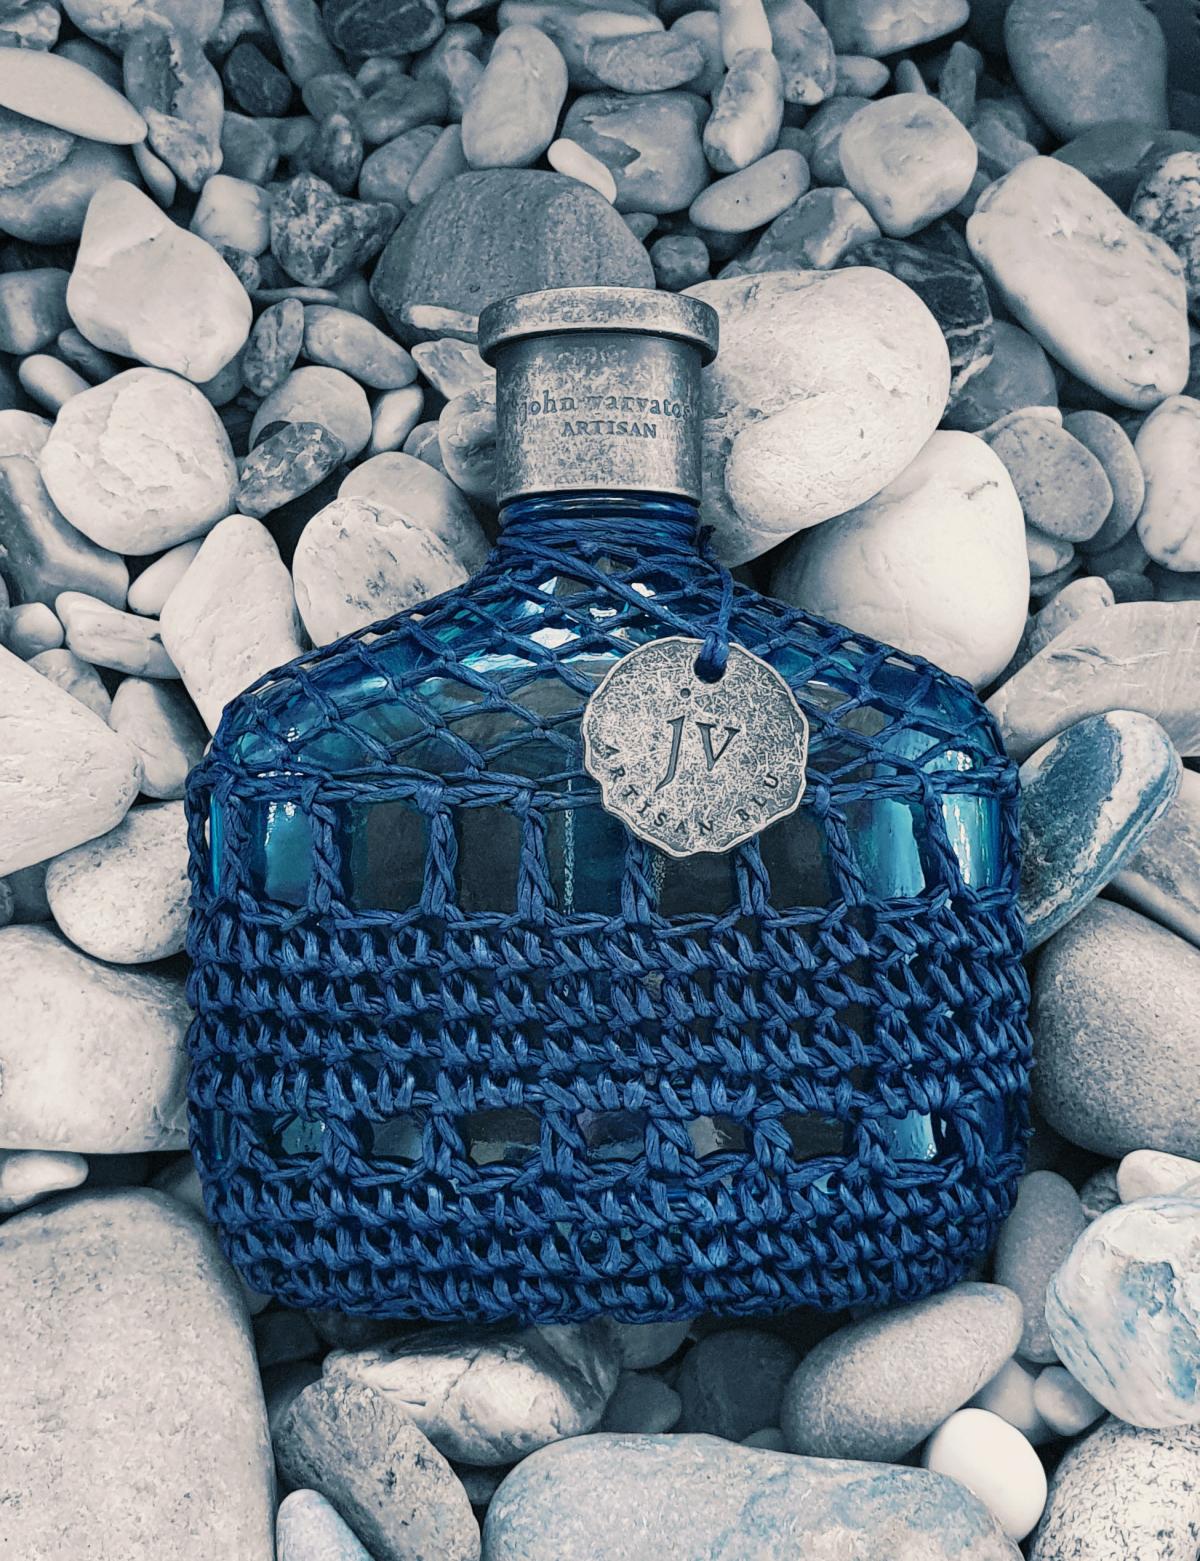 perfume john varvatos artisan blu